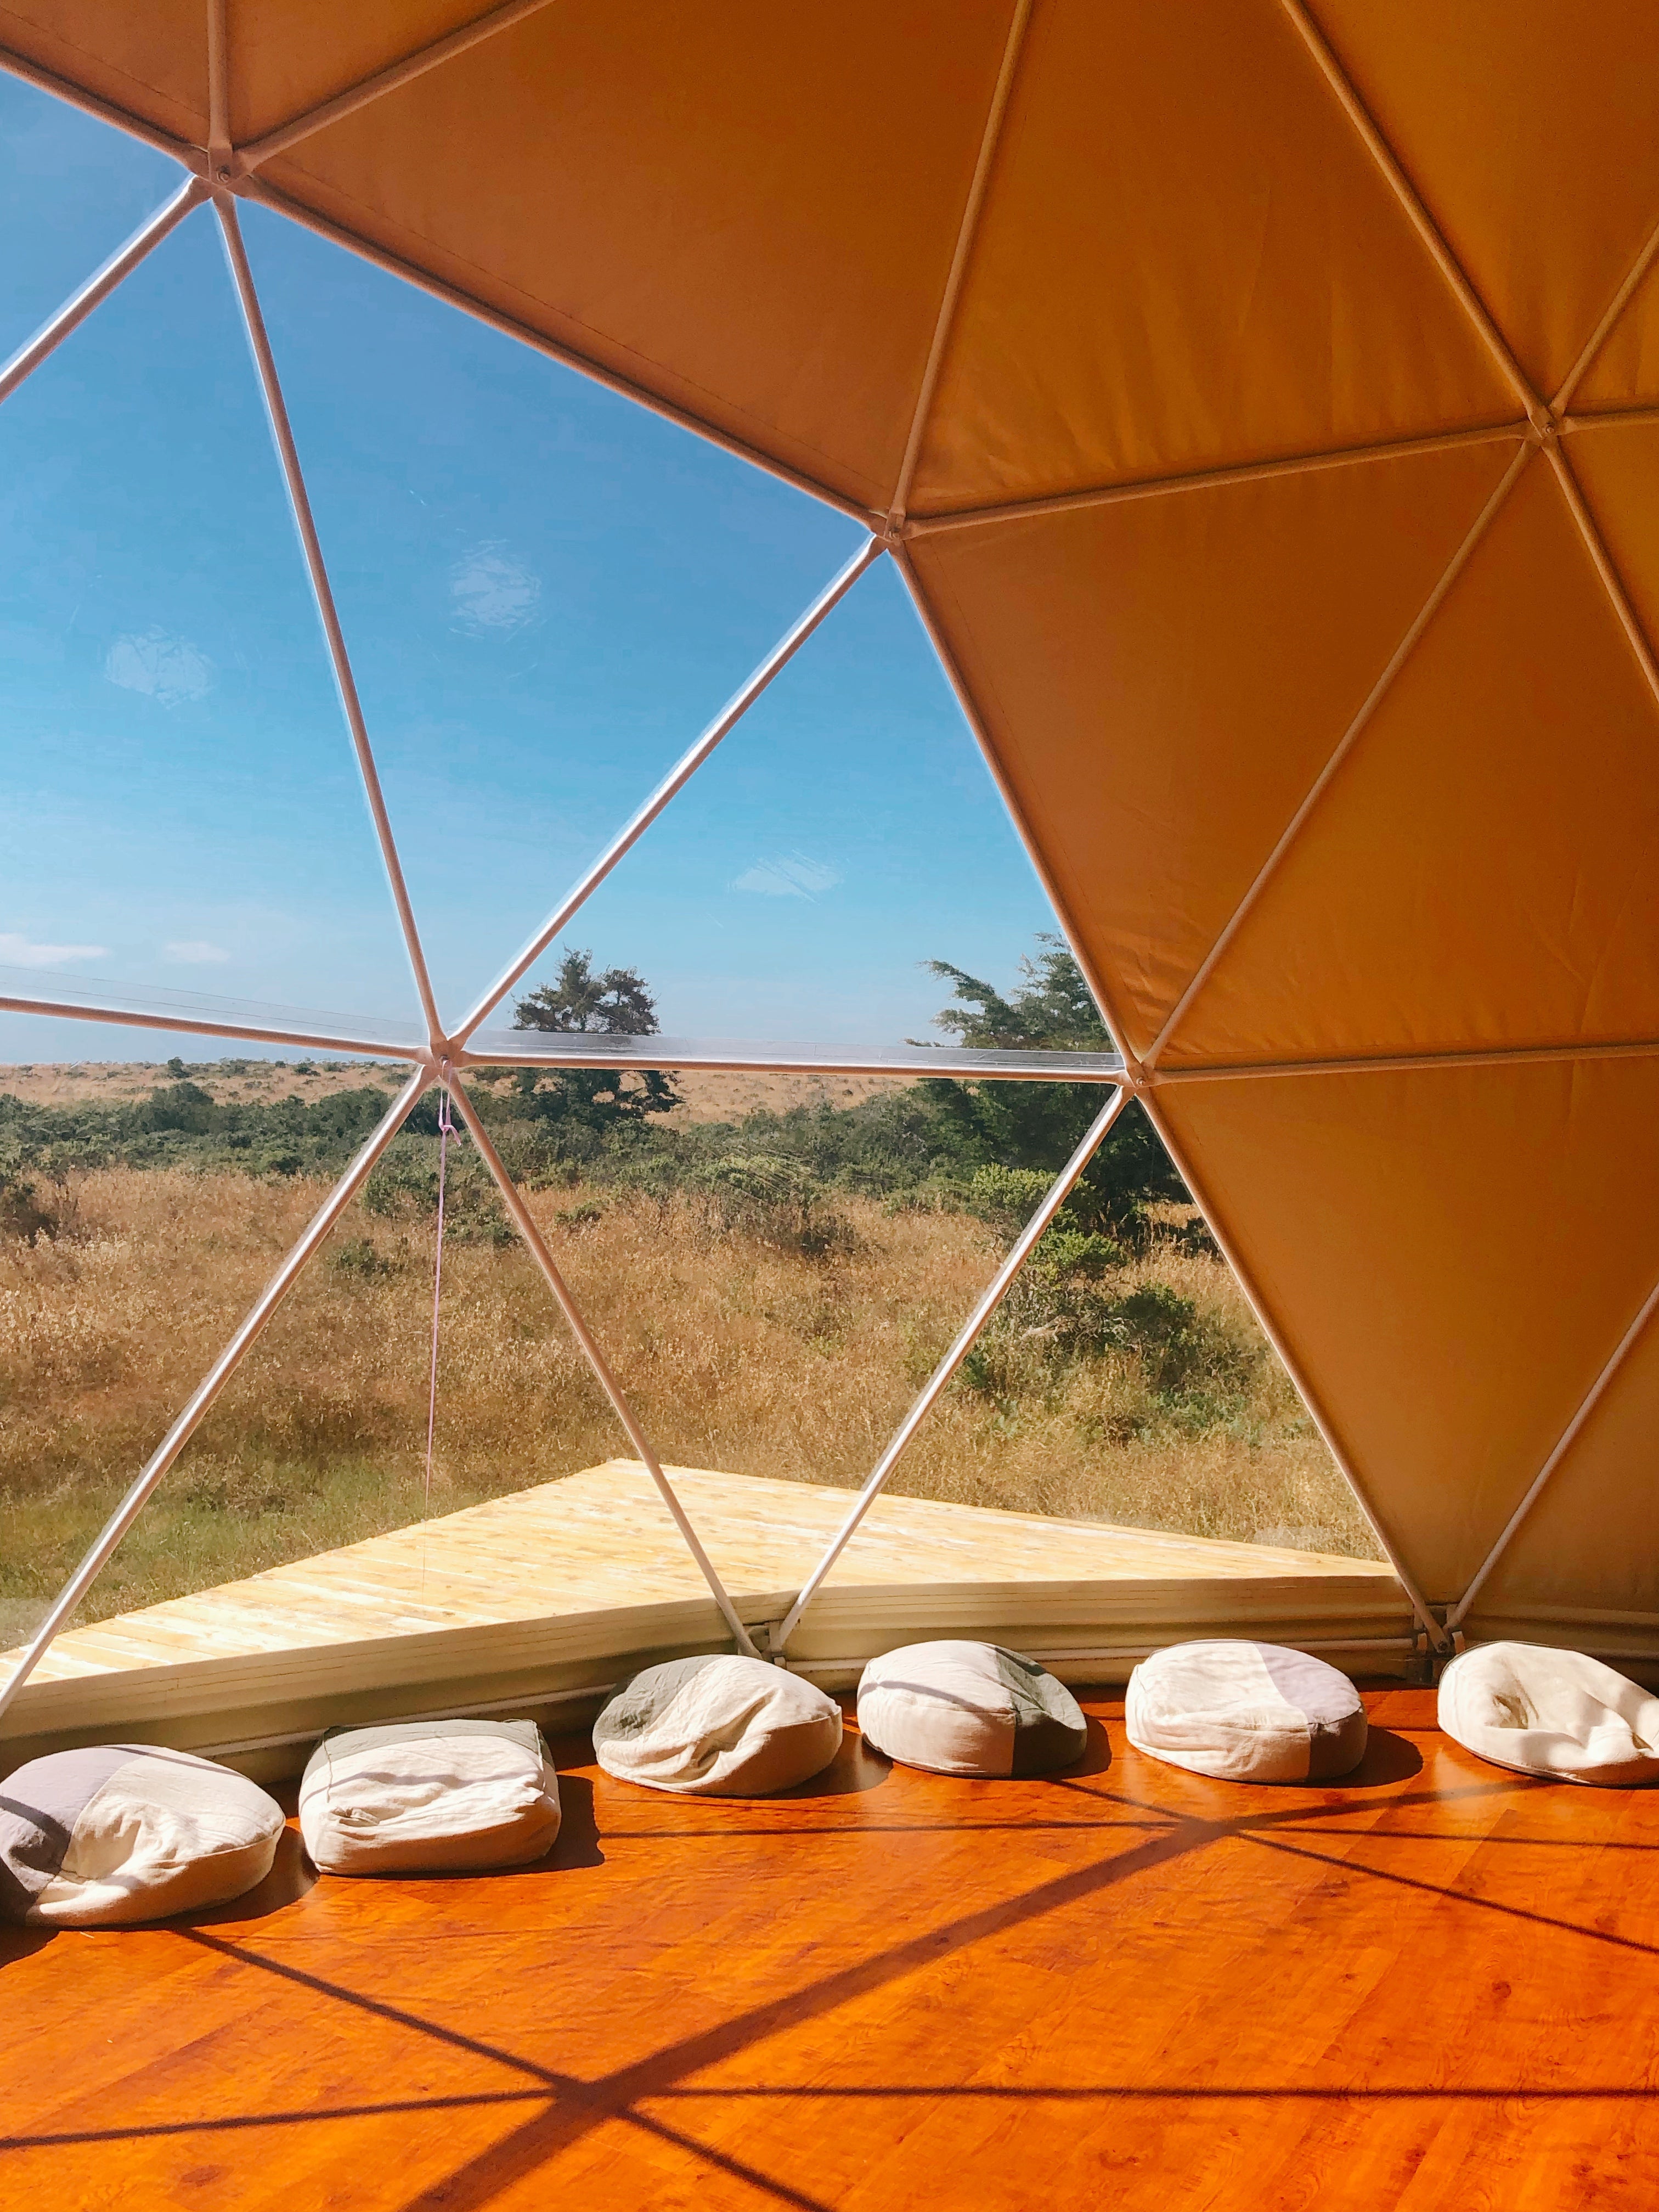 Hot Yoga Dome Tent Portable Inflatable Hot Yoga Dome Personal Yoga